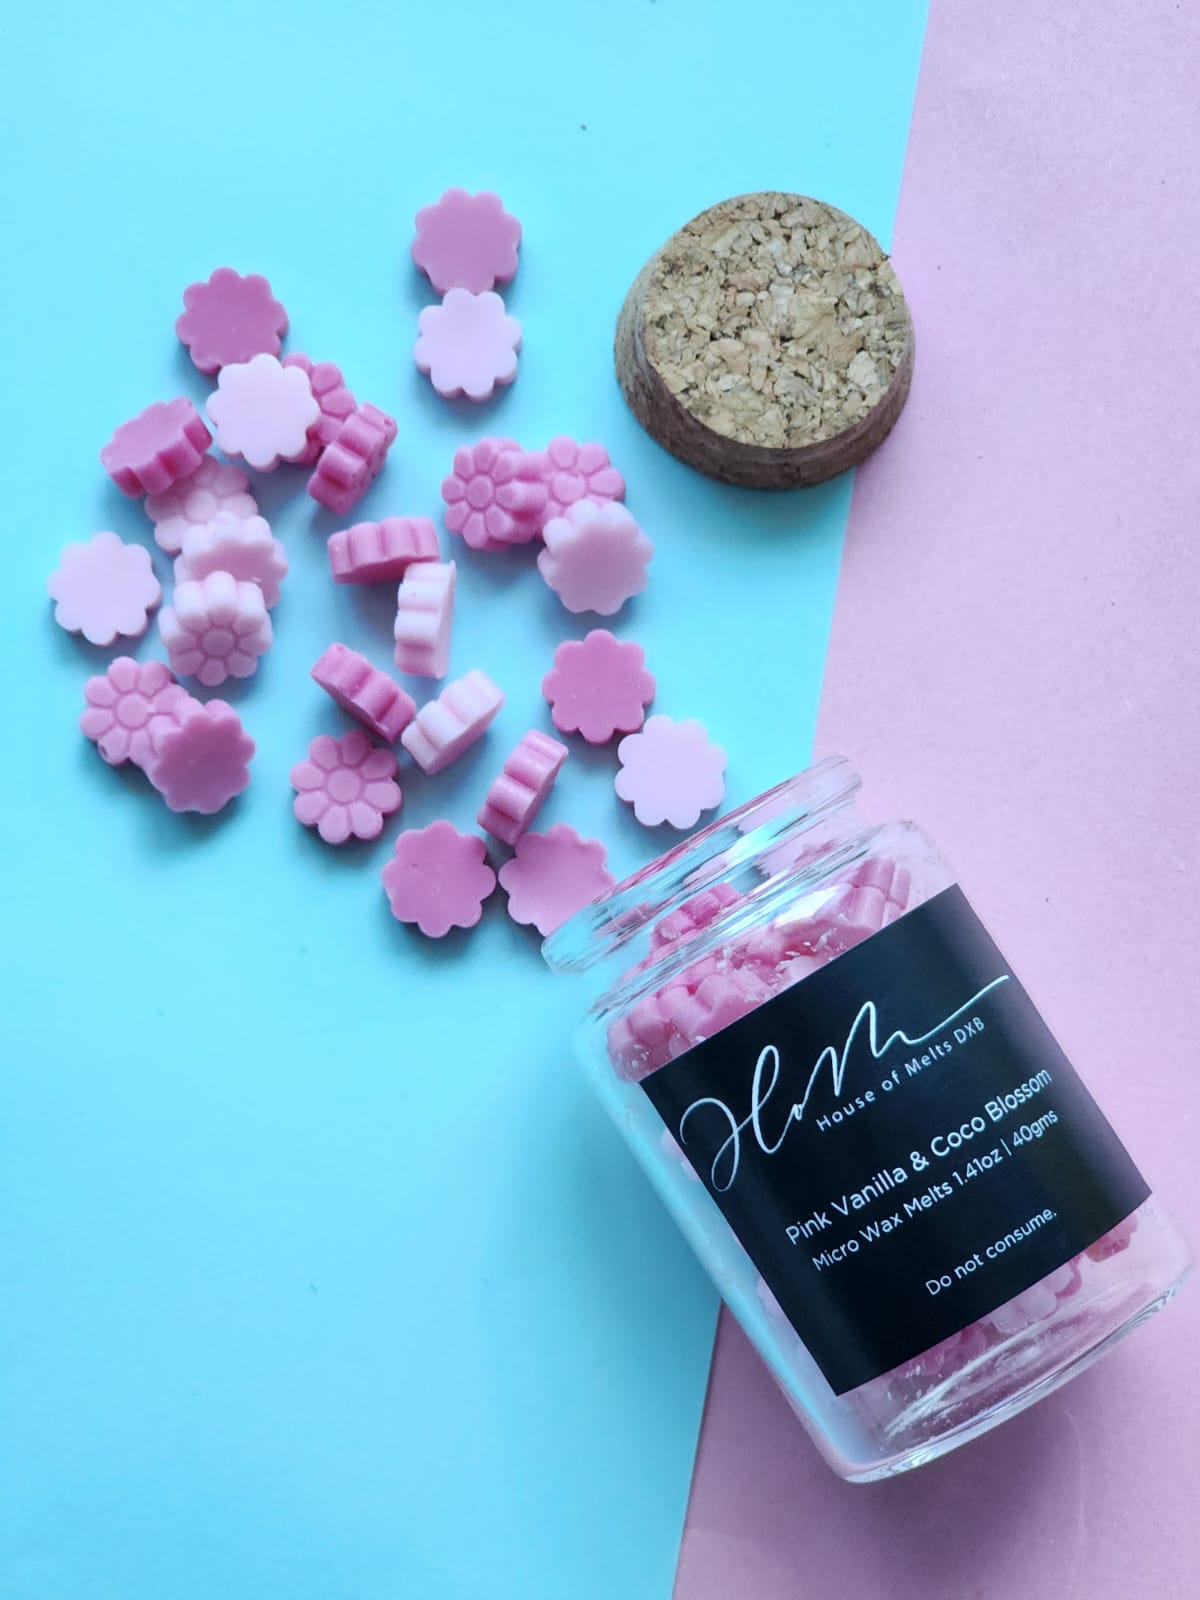 Pink Vanilla & Coco Blossom micro wax melts